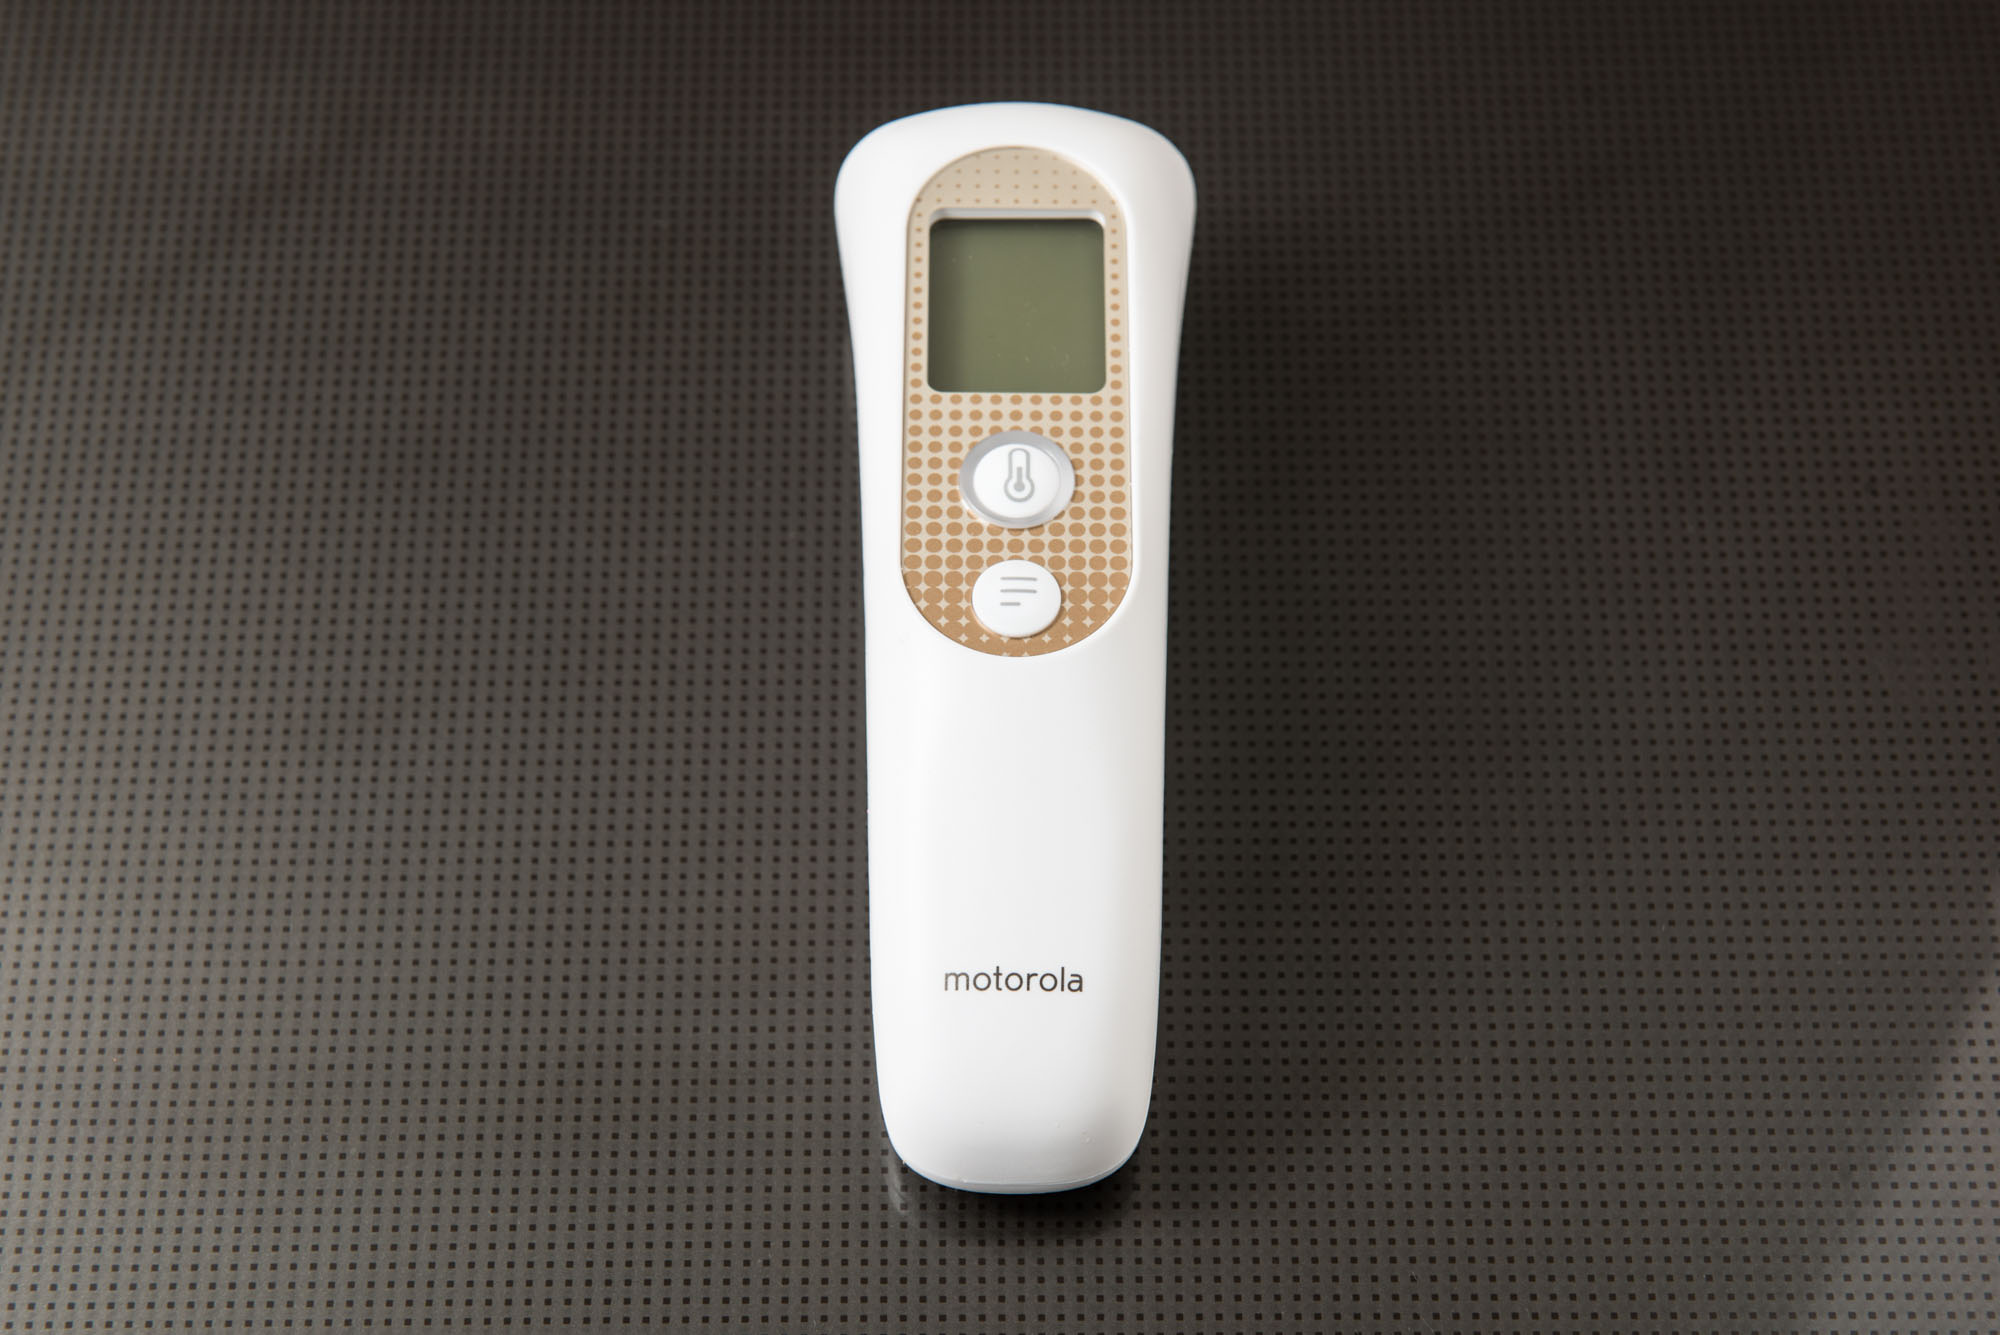 Motorola smart thermometer